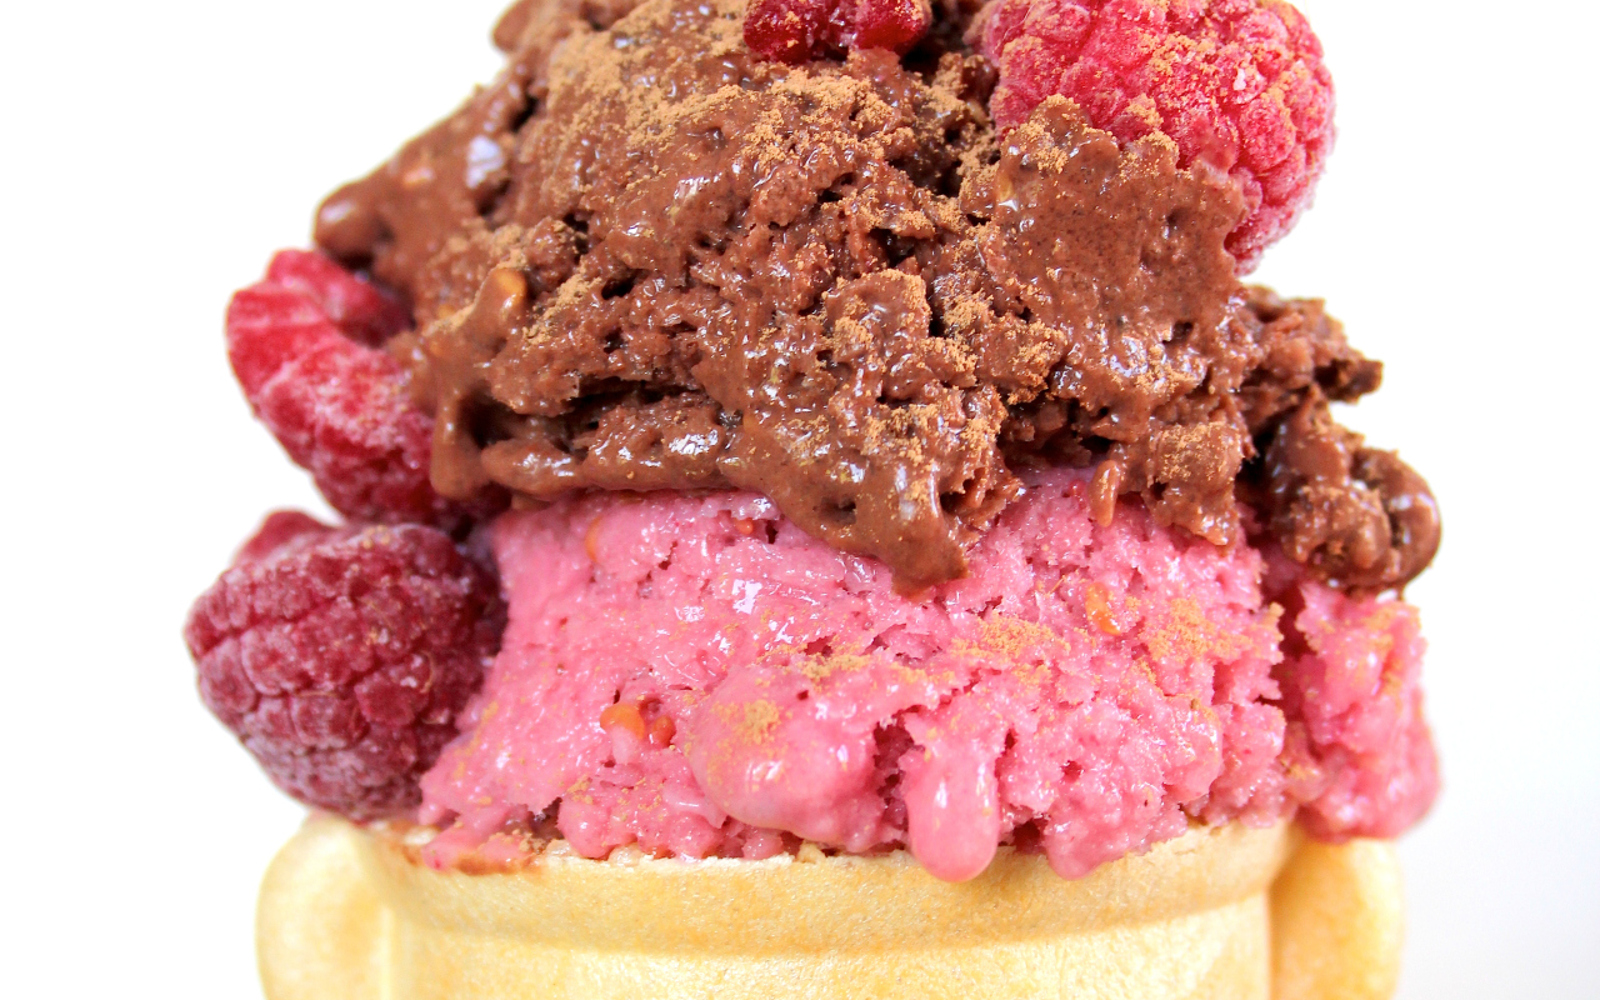 Raw Raspberry and Chocolate Ice Cream